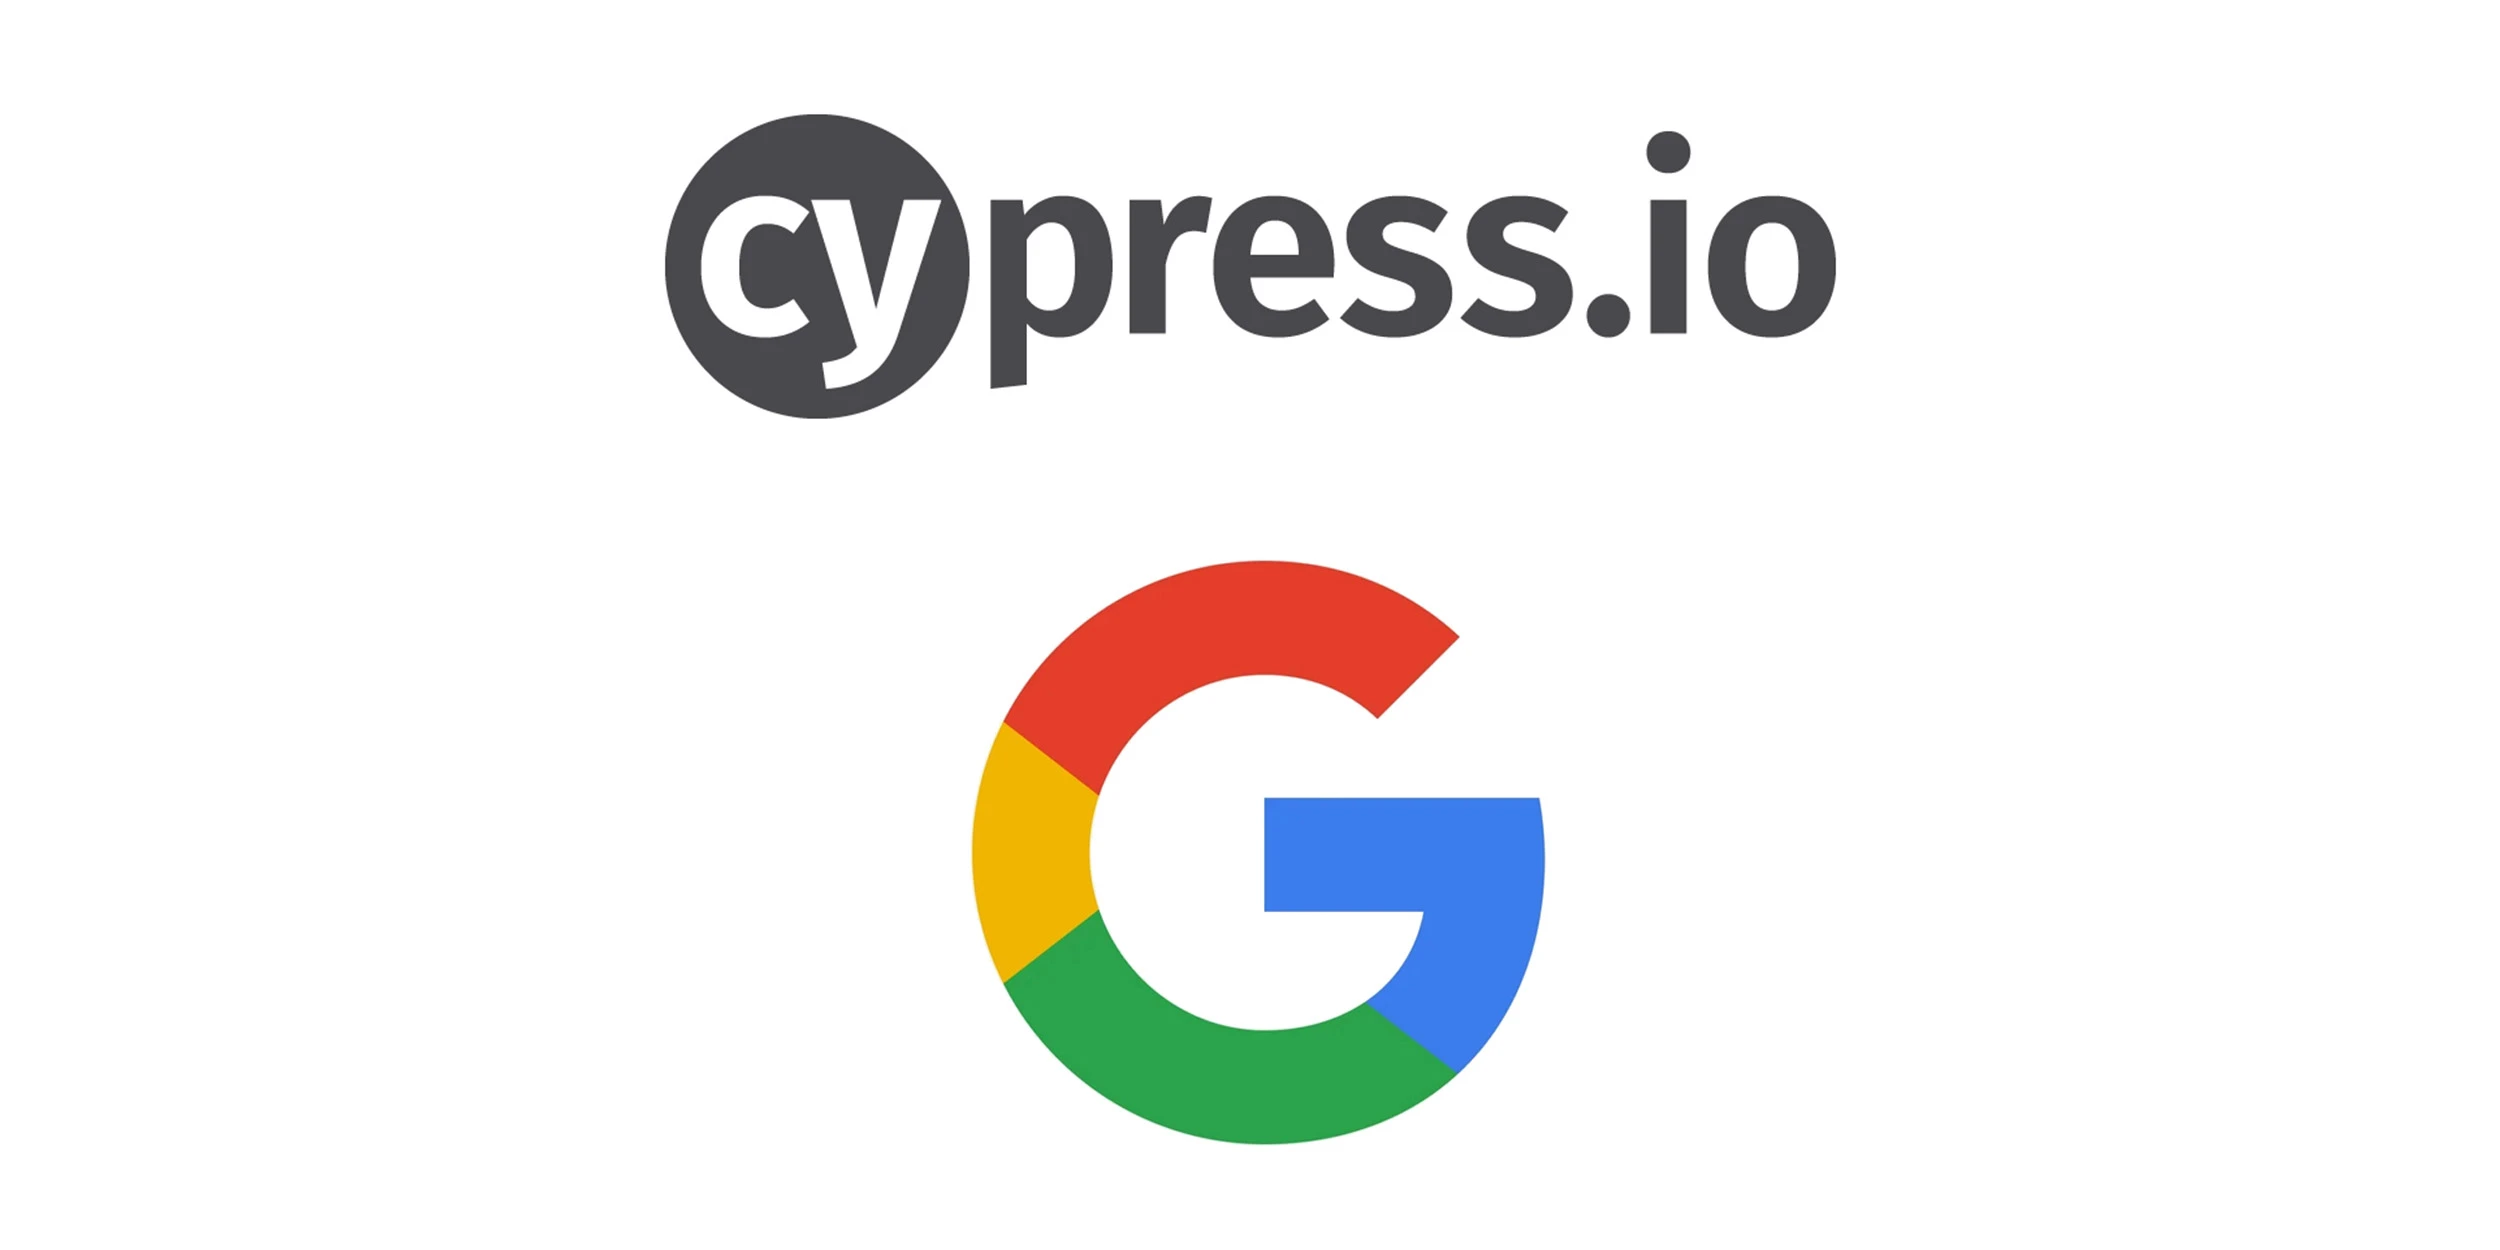 API Testing with Cypress, Authorization -Bearer token